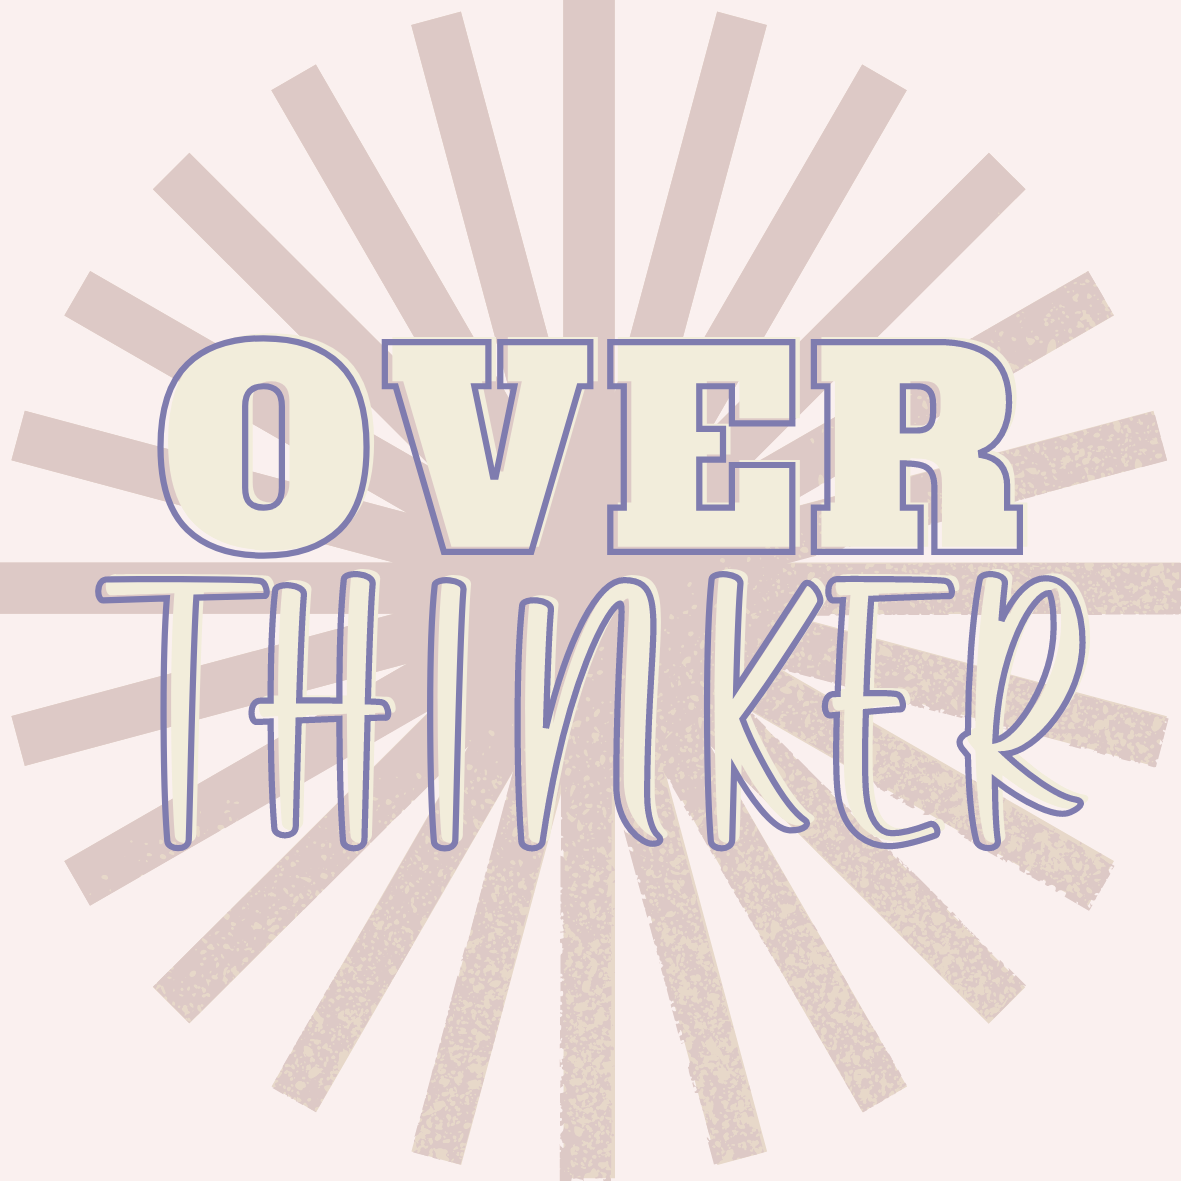 Over Thinker Sticker